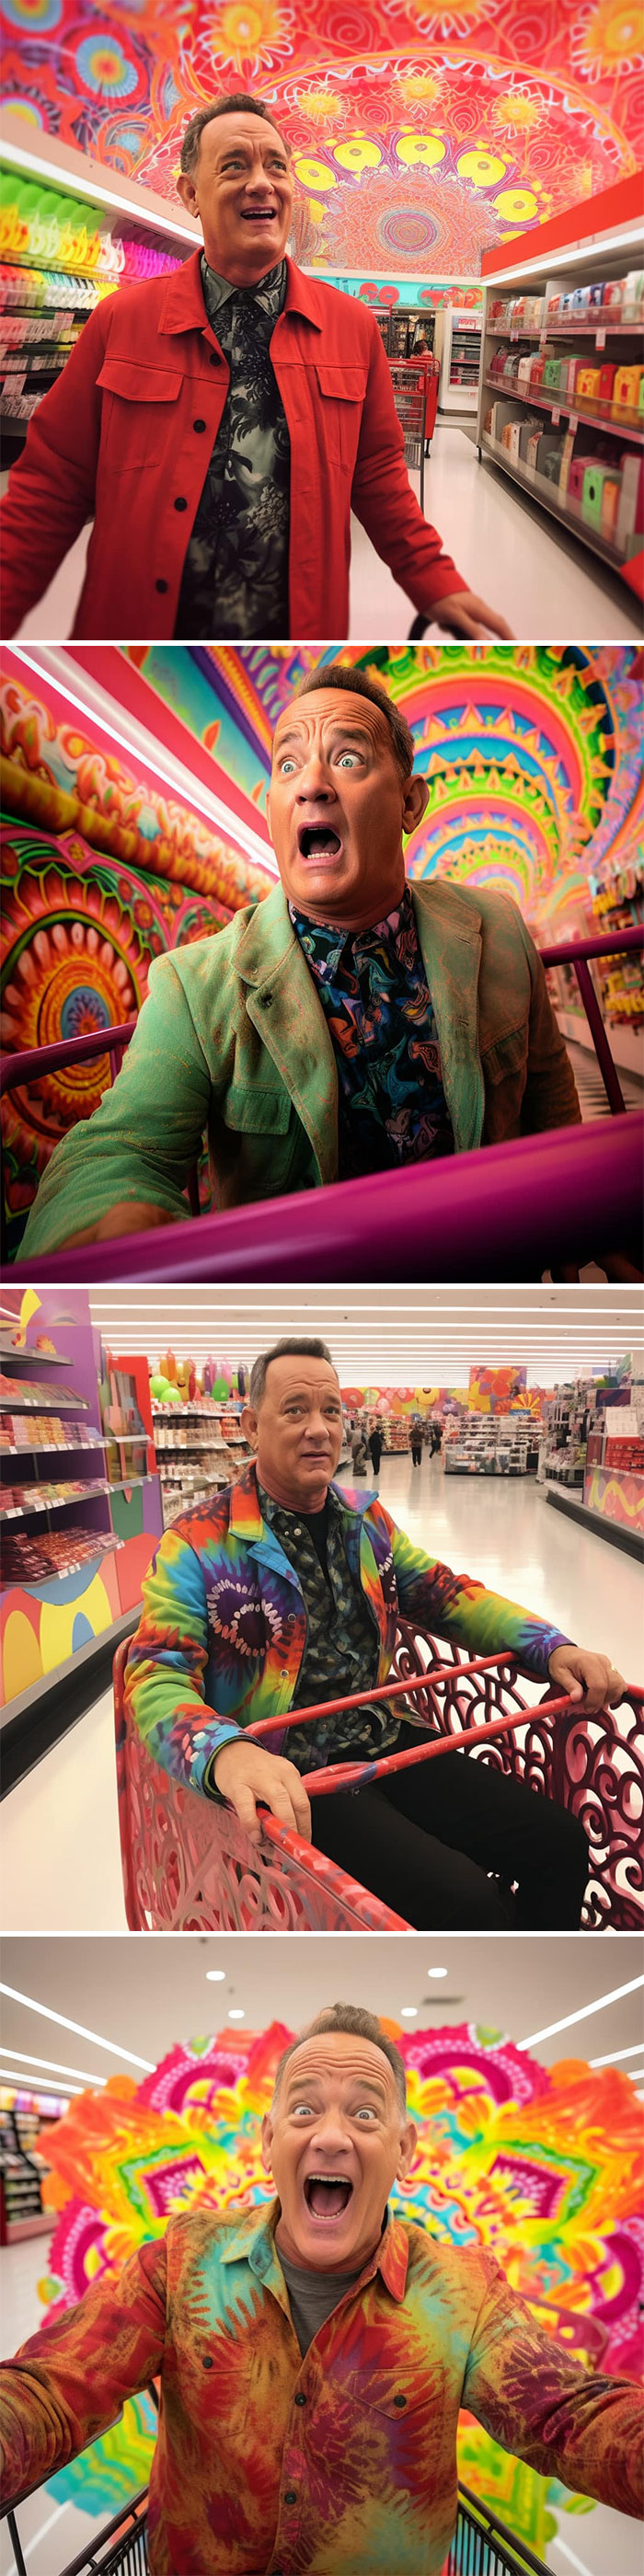 Tom Hanks On Acid At Target